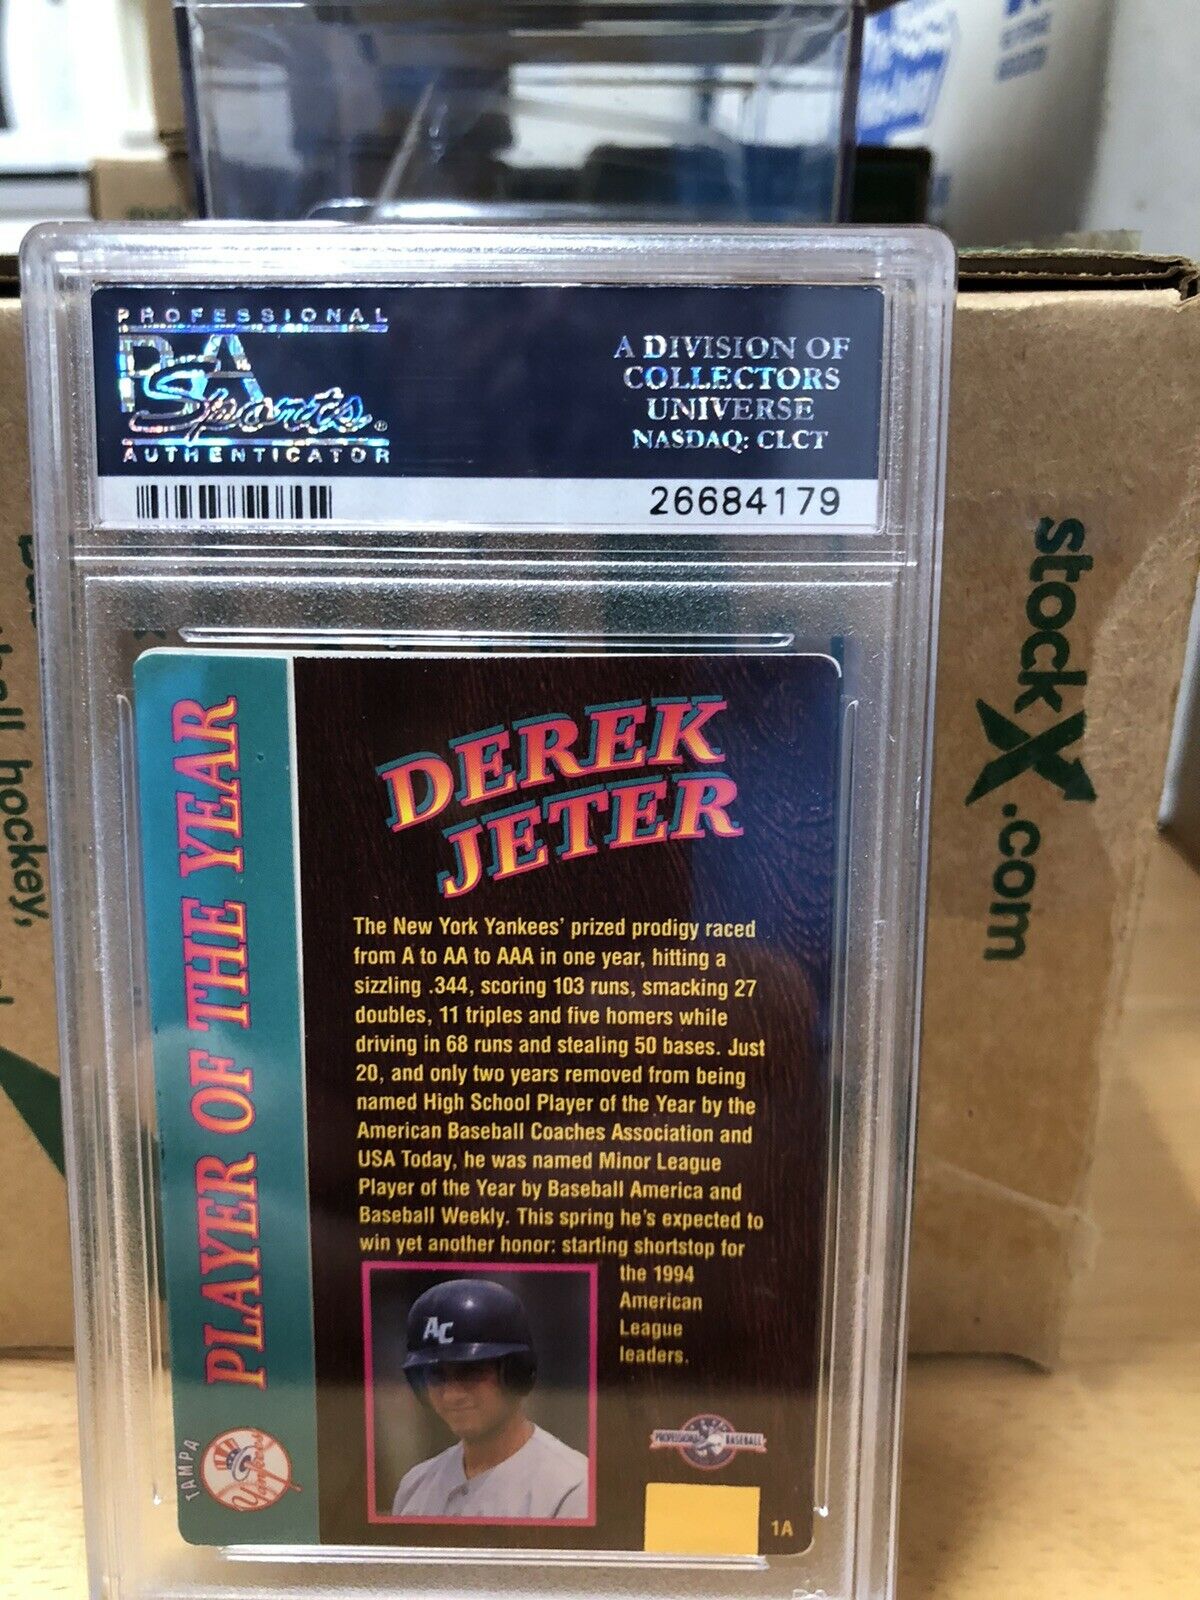 1995 Action Packed 24 Kt Gold Autographed Derek Jeter Rookie Card PSA